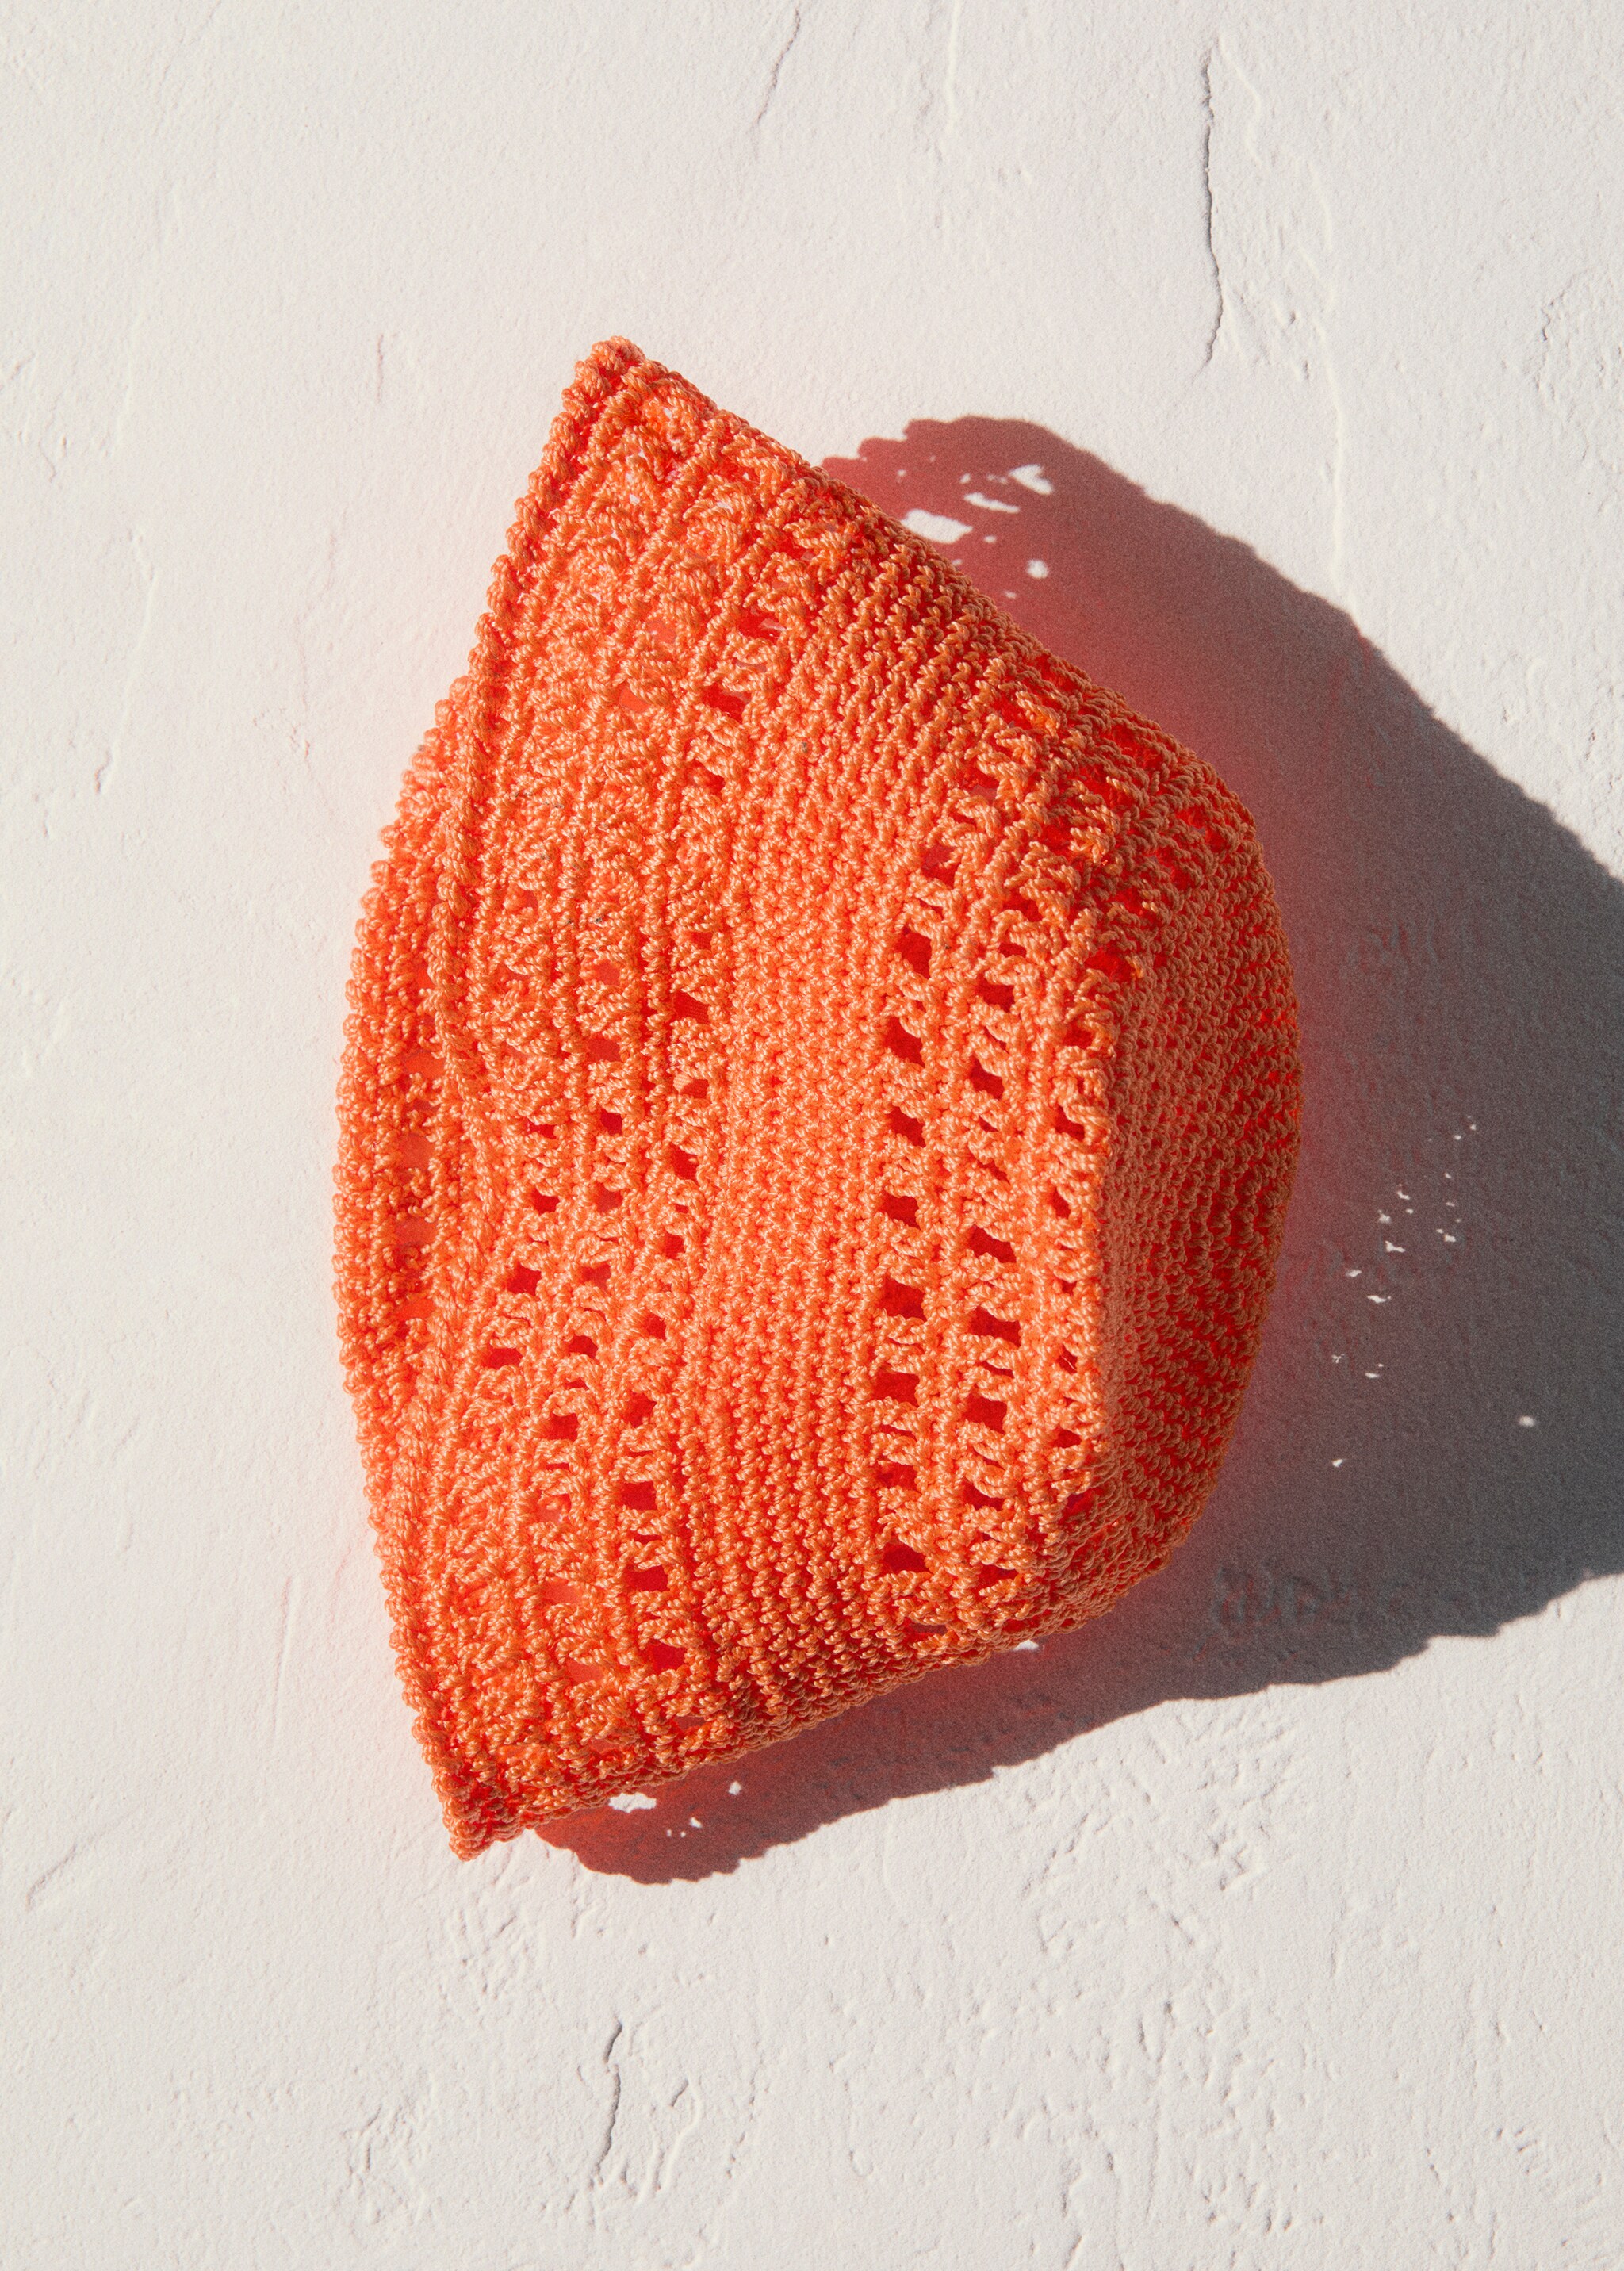 Crochet bucket hat - Details of the article 6